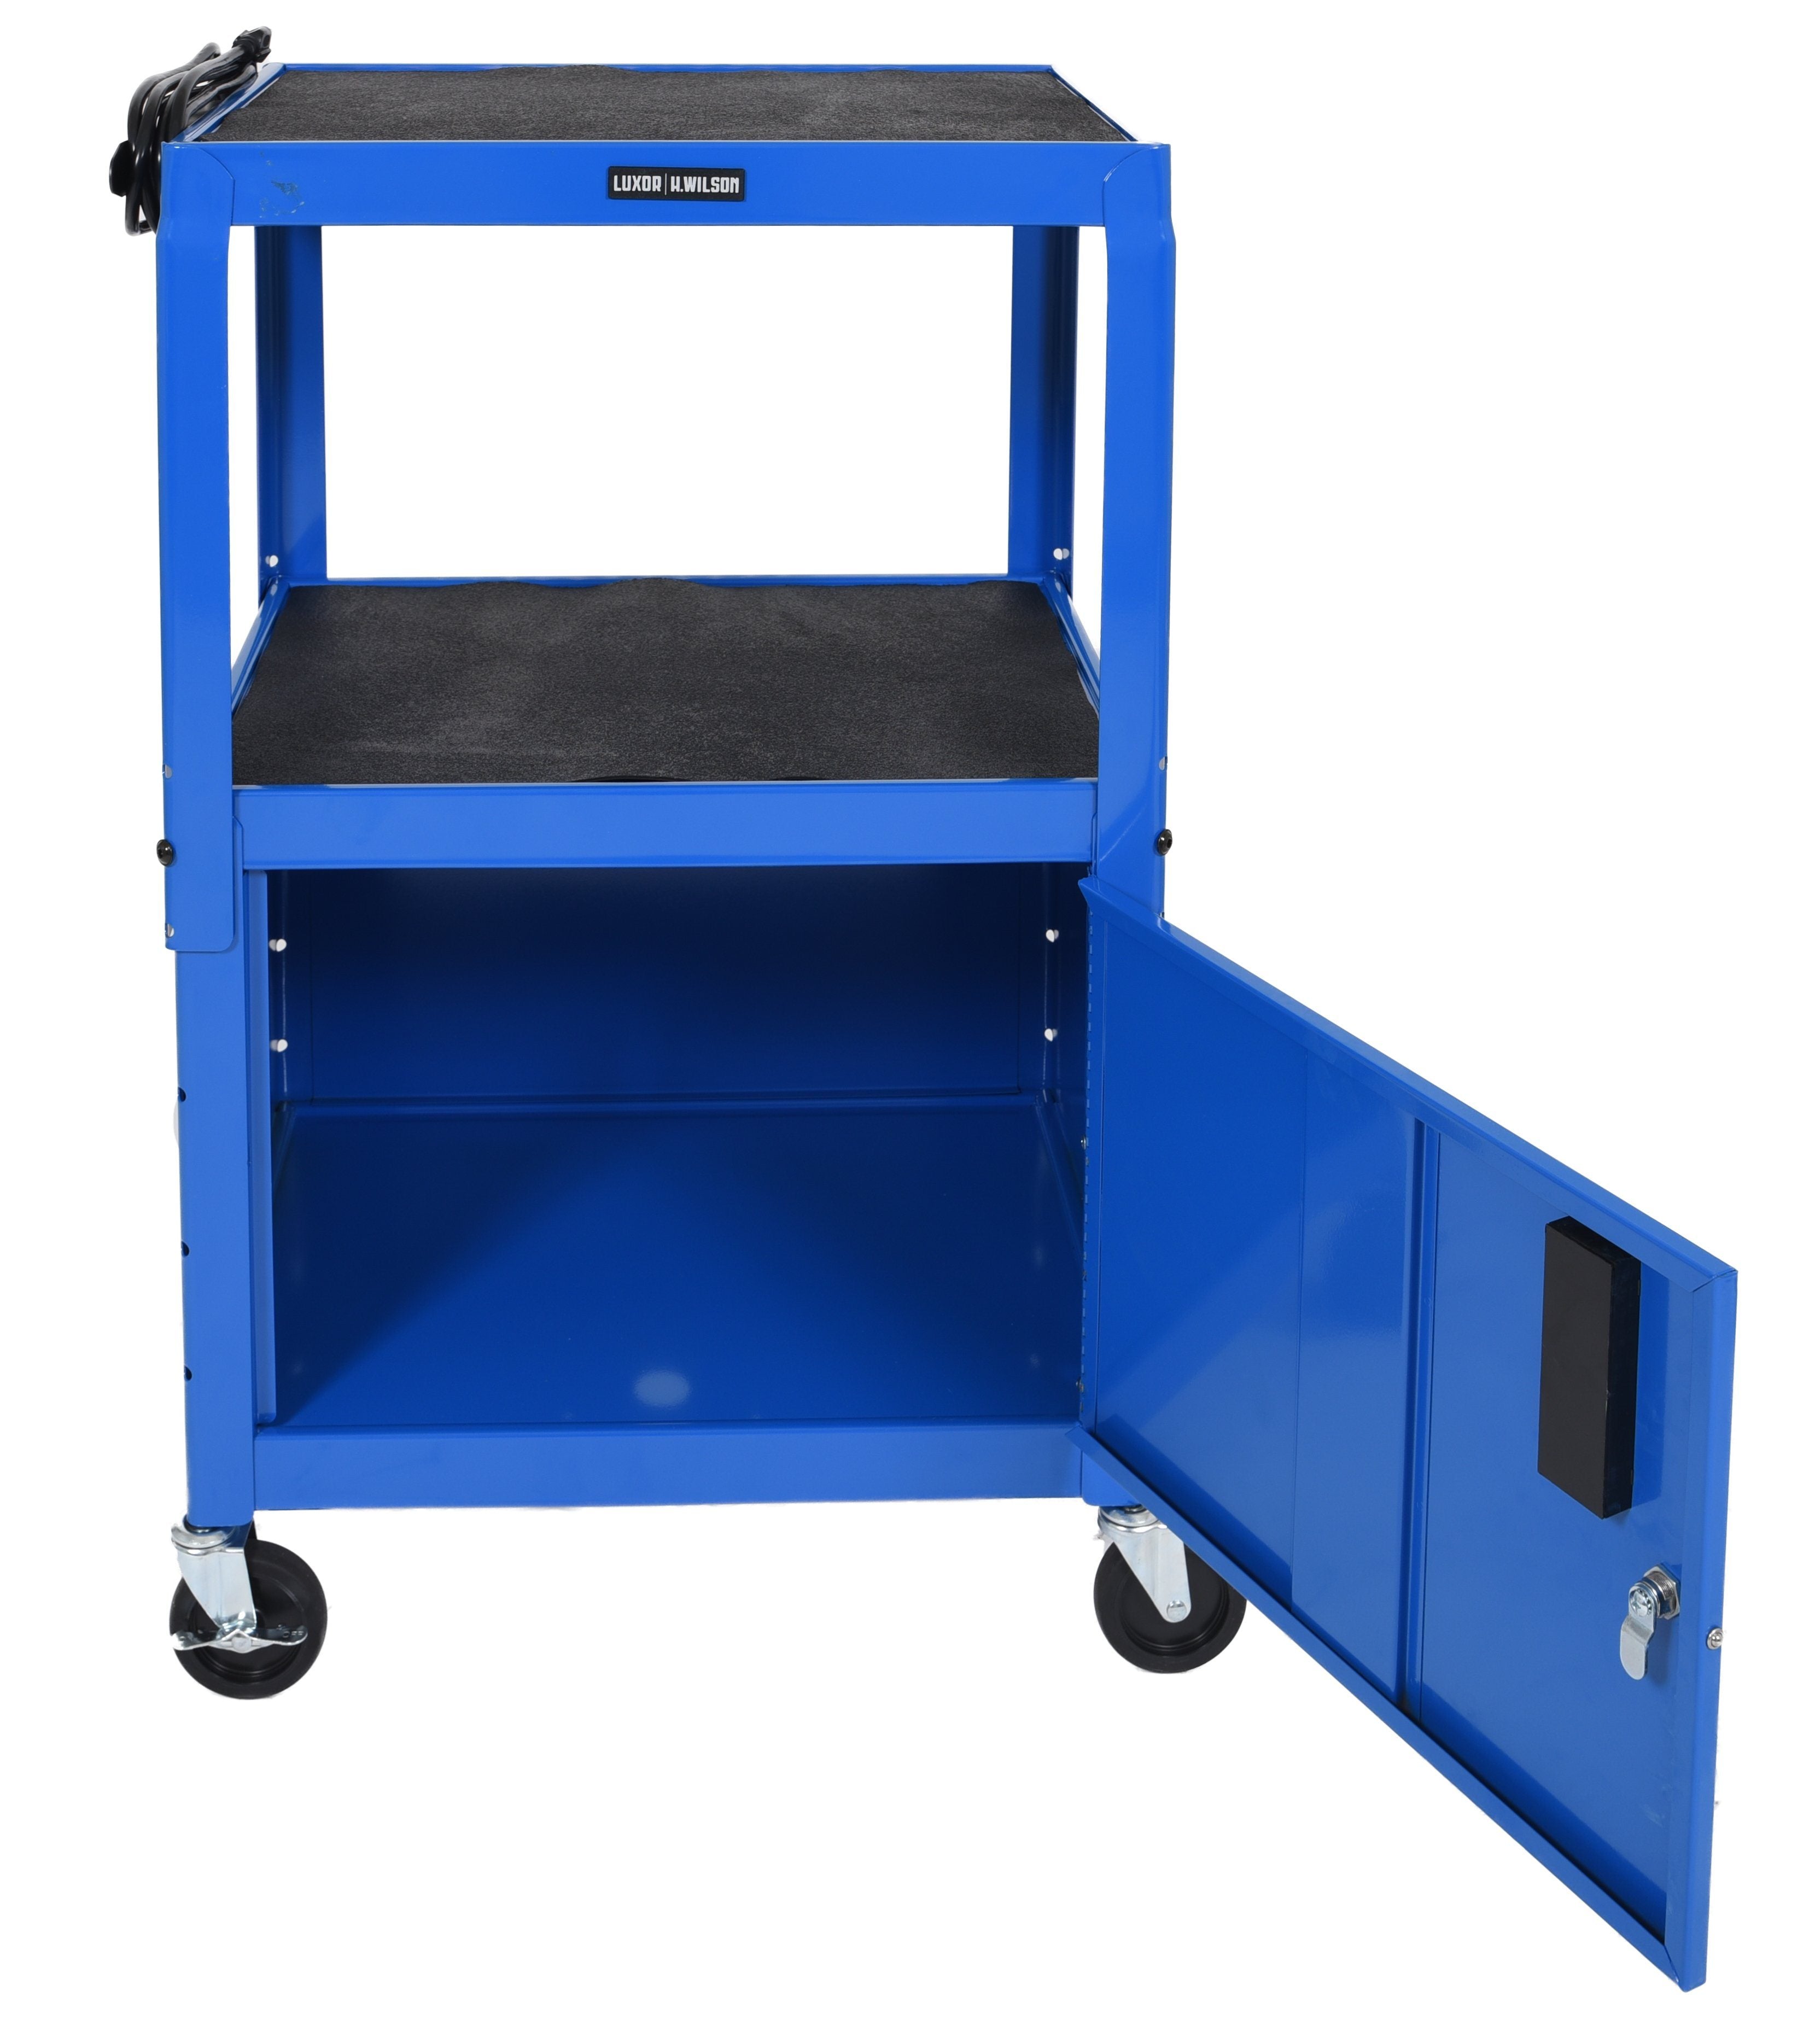 Luxor Blue 42" Adj Height Cart W/ Cabinet